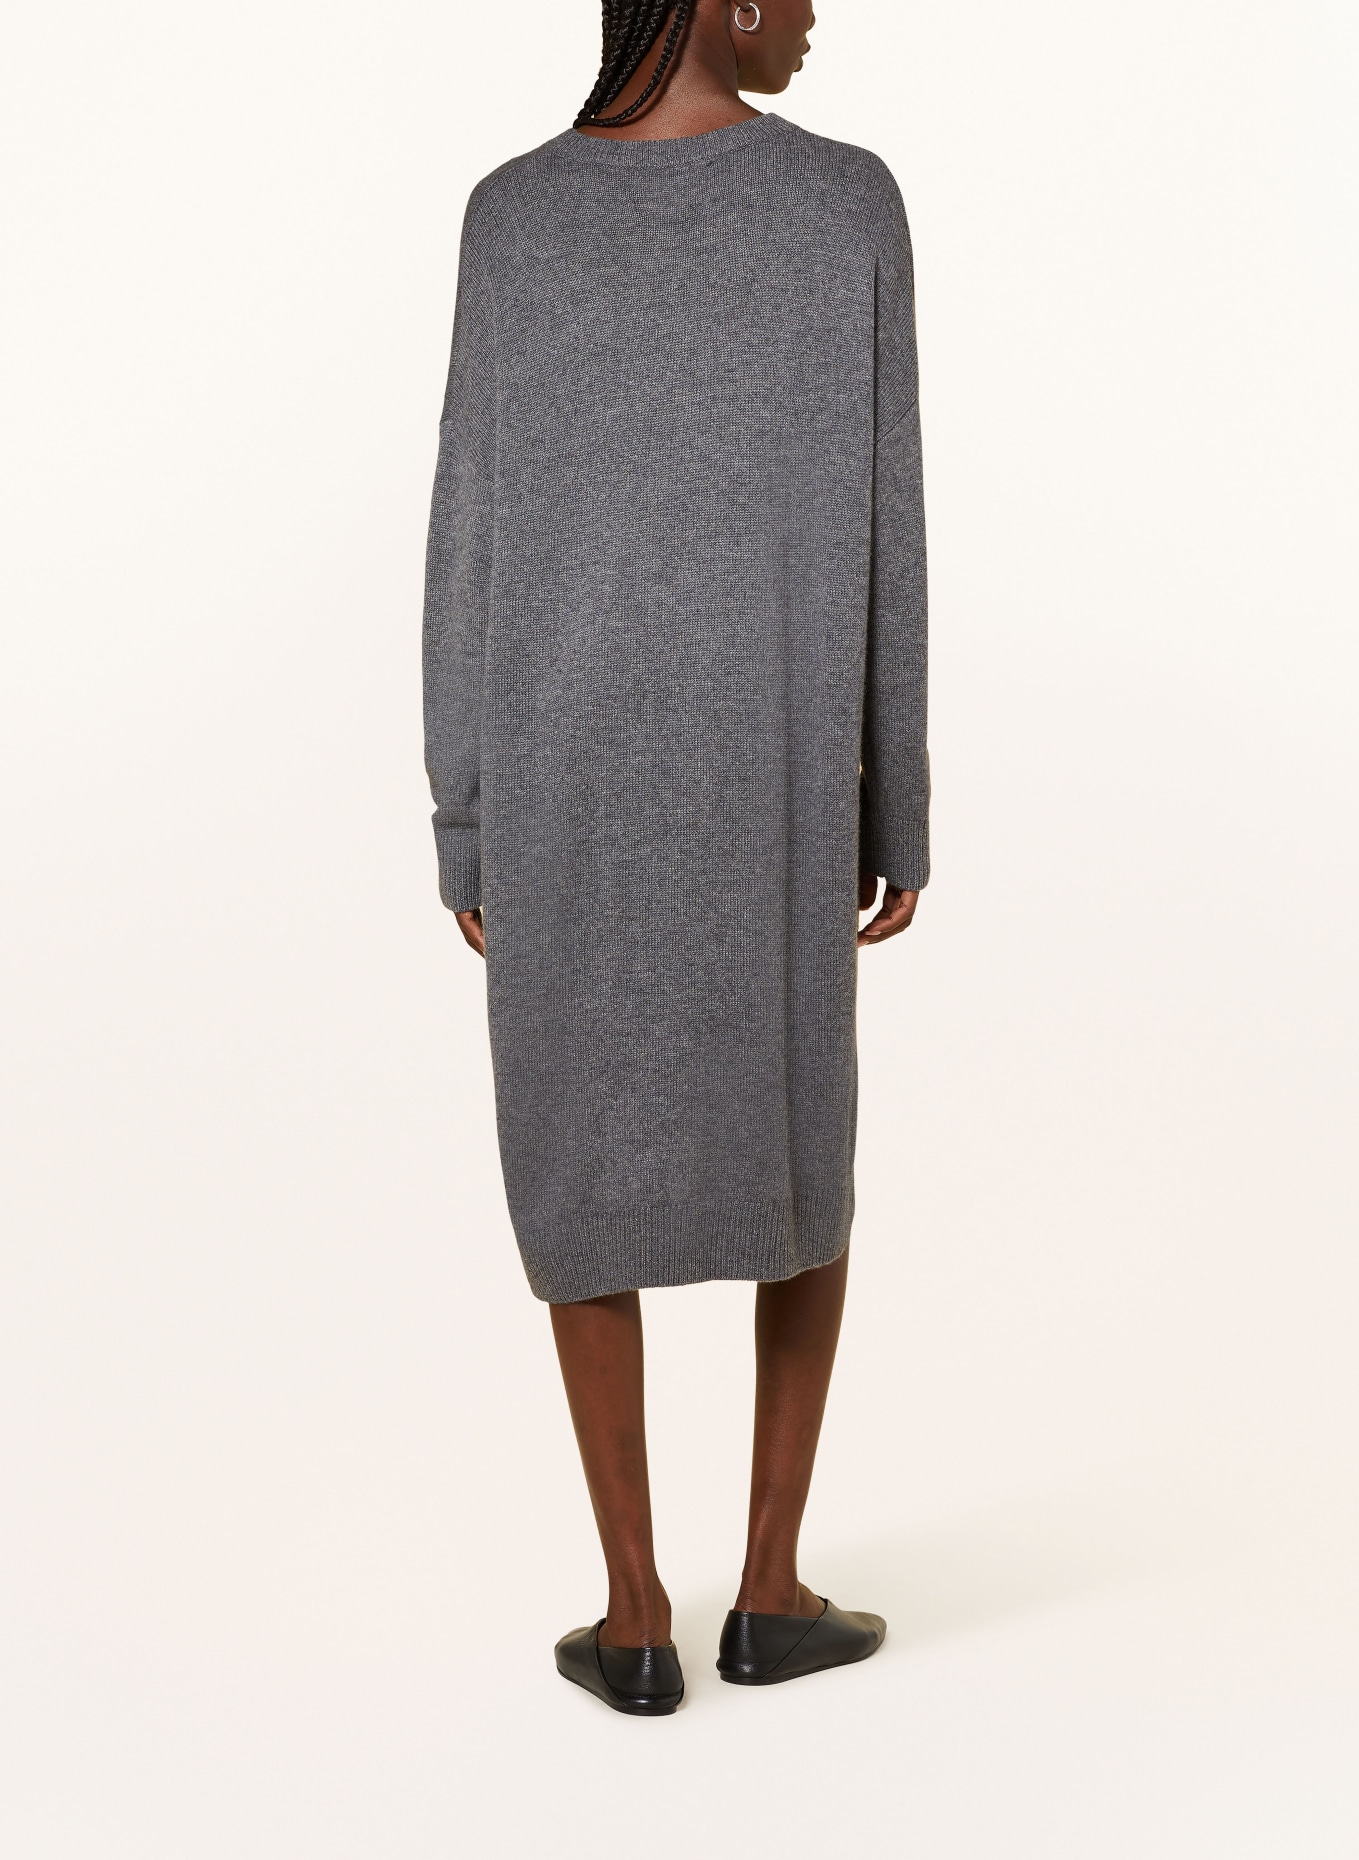 LISA YANG Knit dress FAYE made of cashmere, Color: GRAY (Image 3)